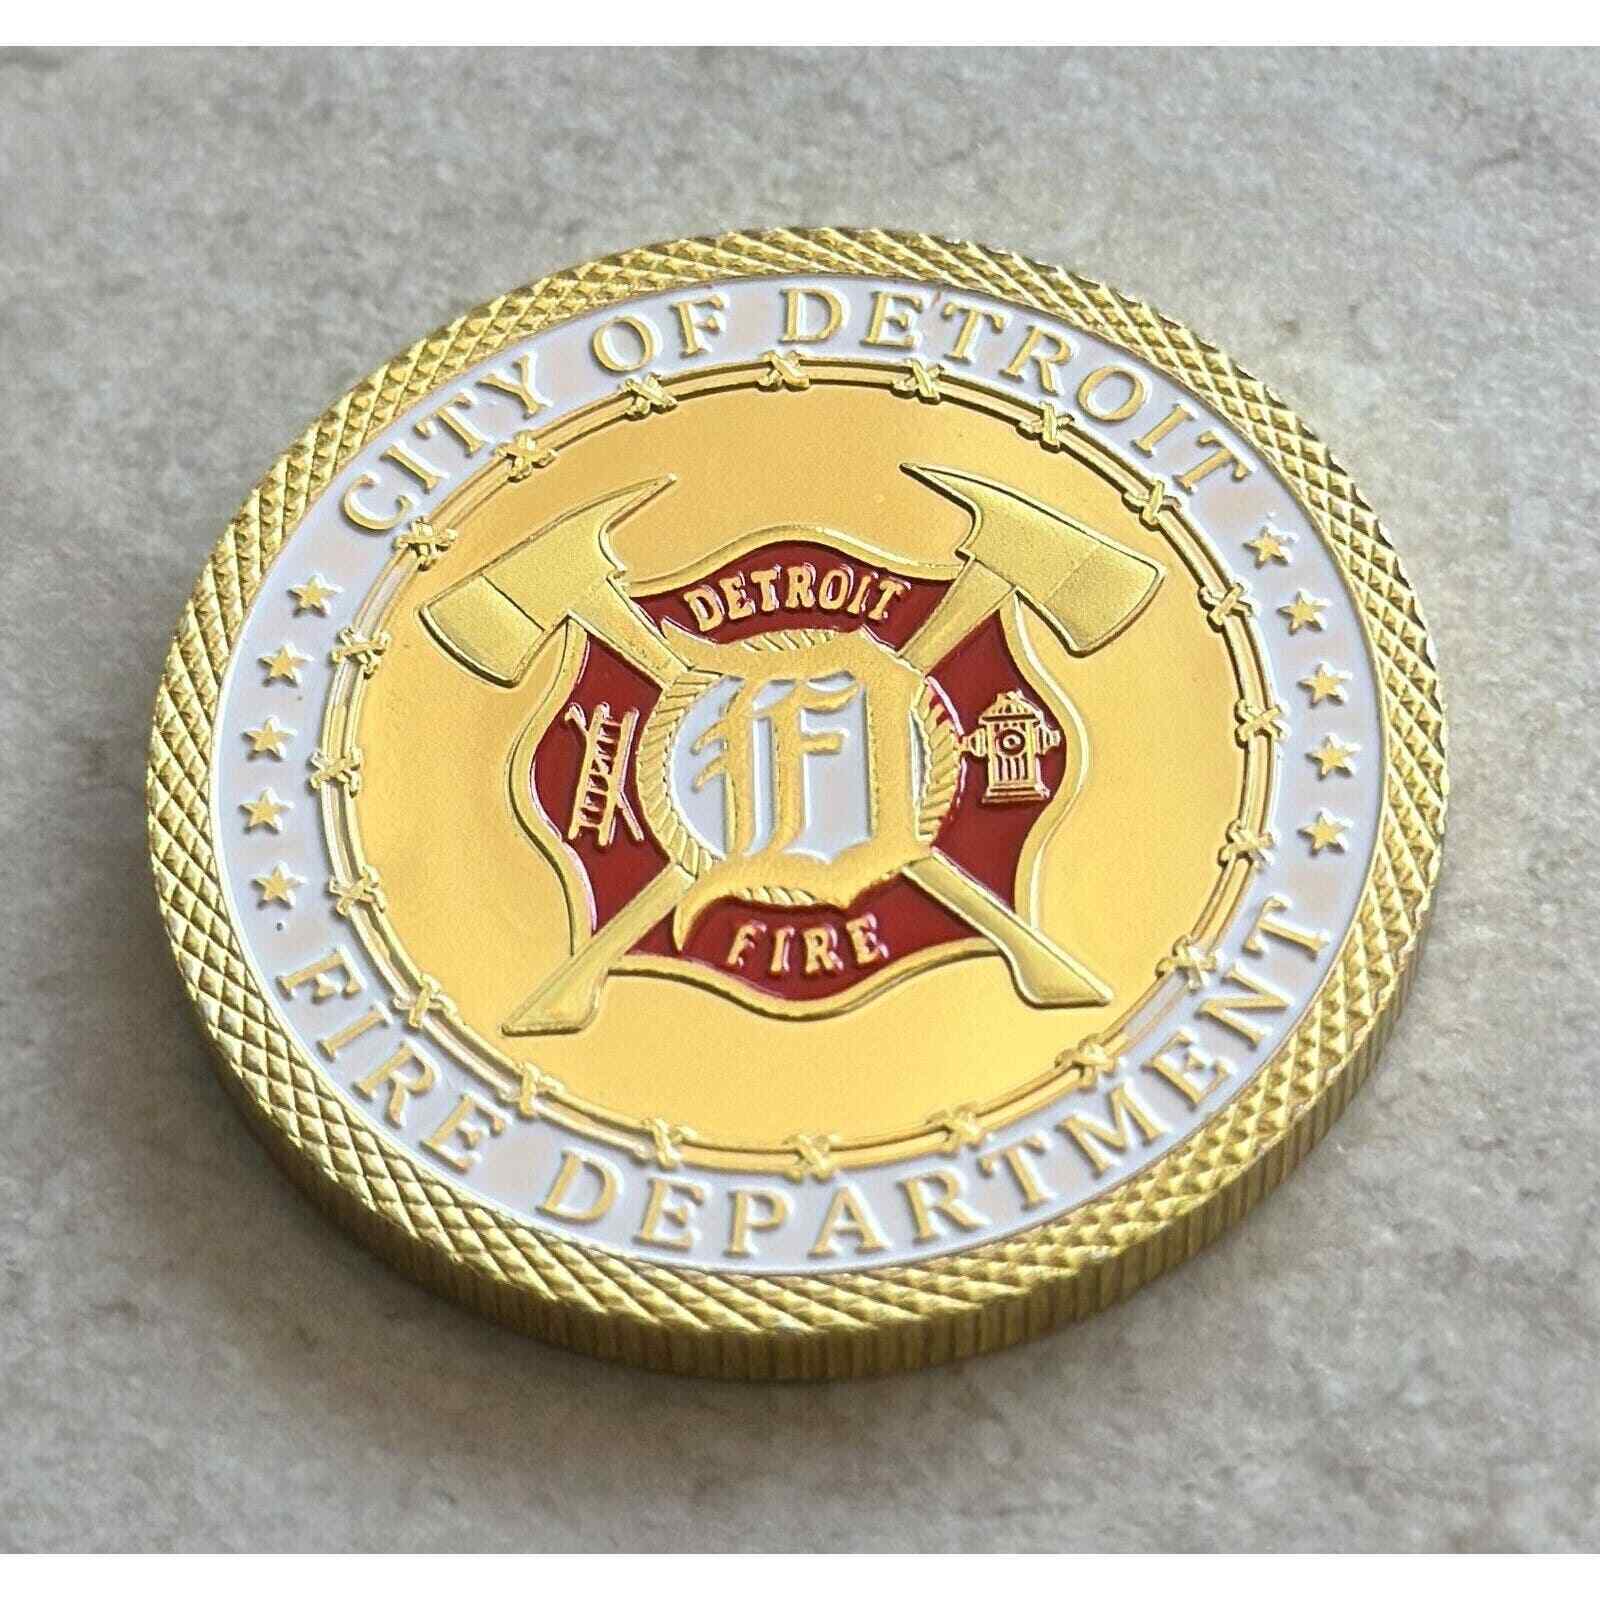 DETROIT Fire Department Challenge Coin